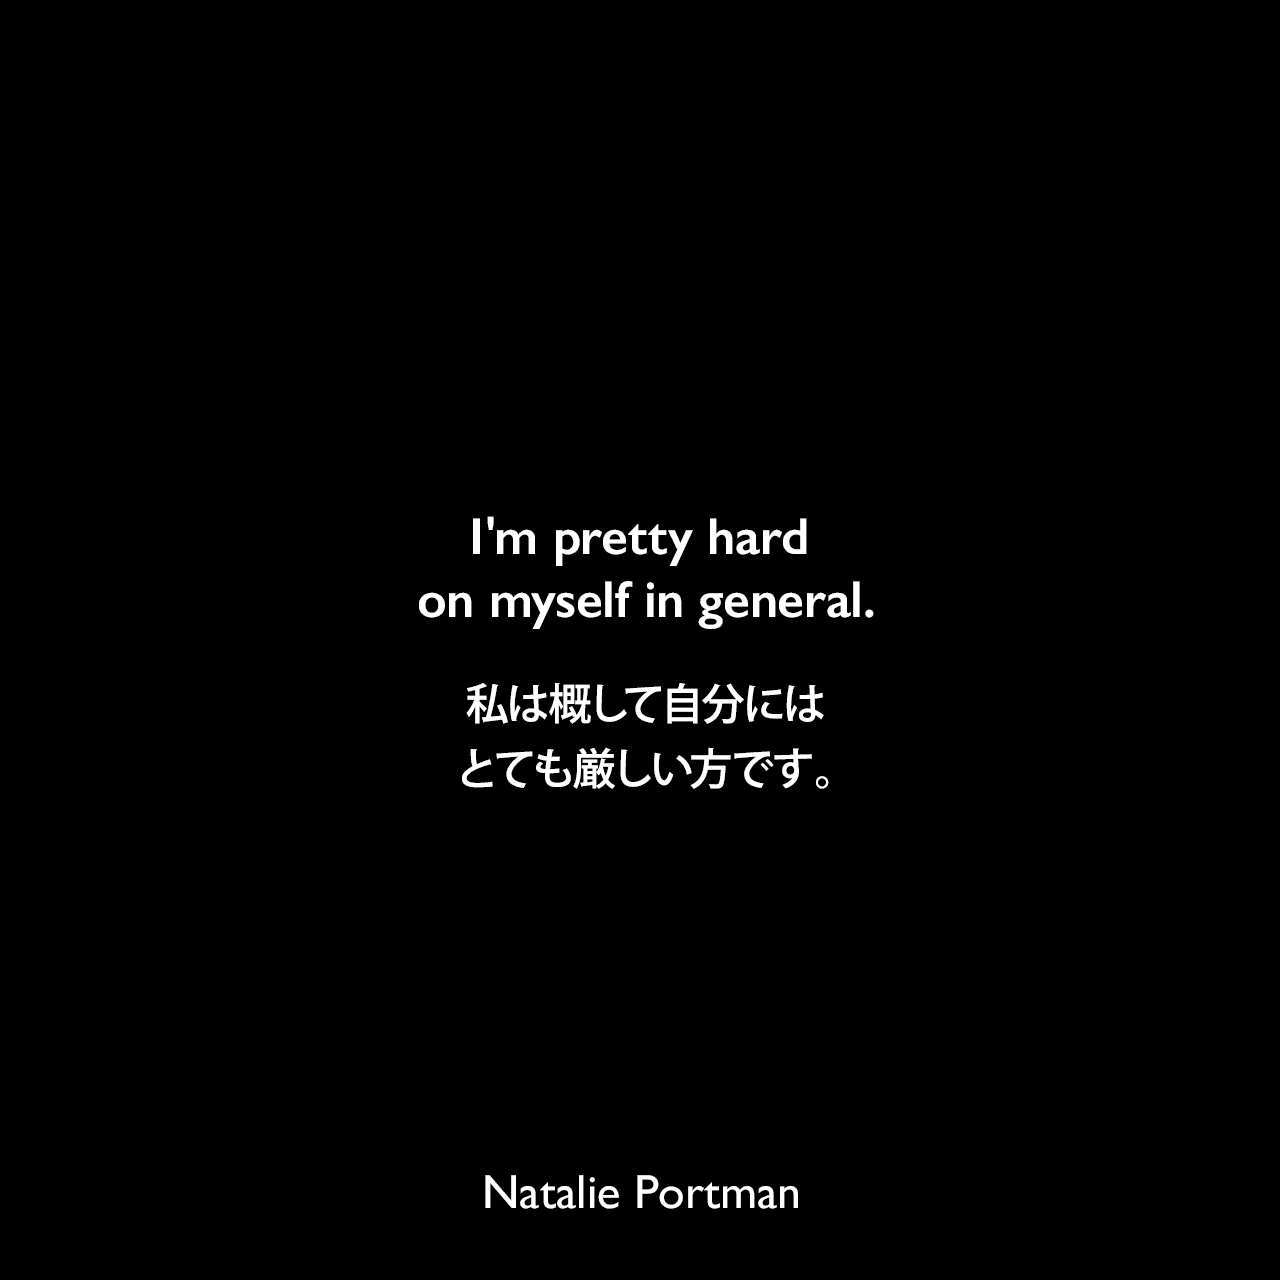 I'm pretty hard on myself in general.私は概して自分にはとても厳しい方です。Natalie Portman